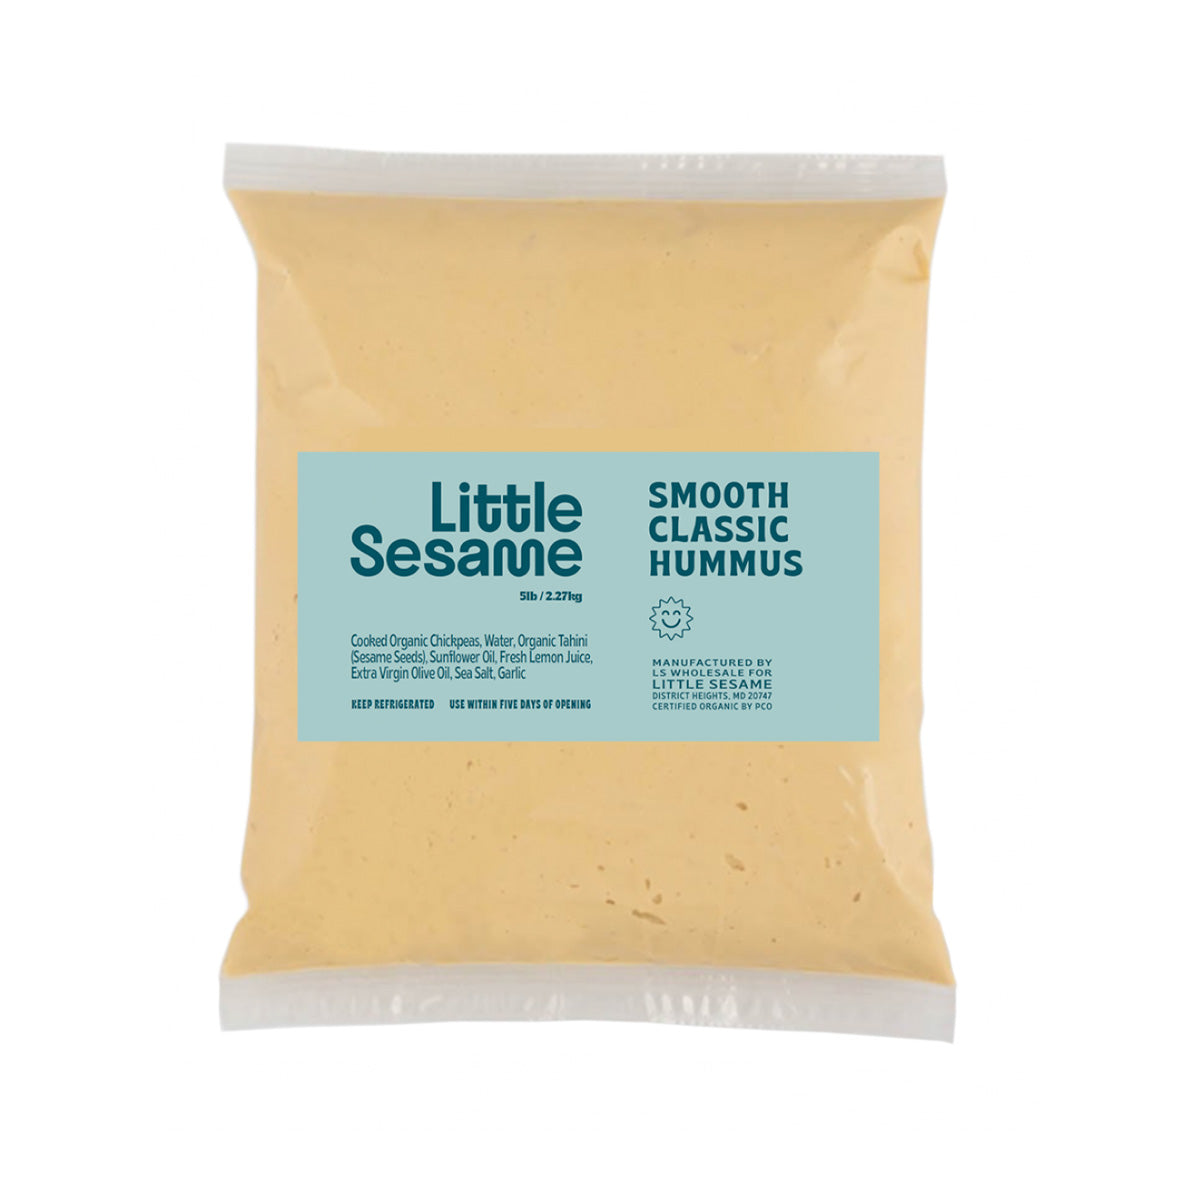 Little Sesame Smooth Classic Hummus 5 LB